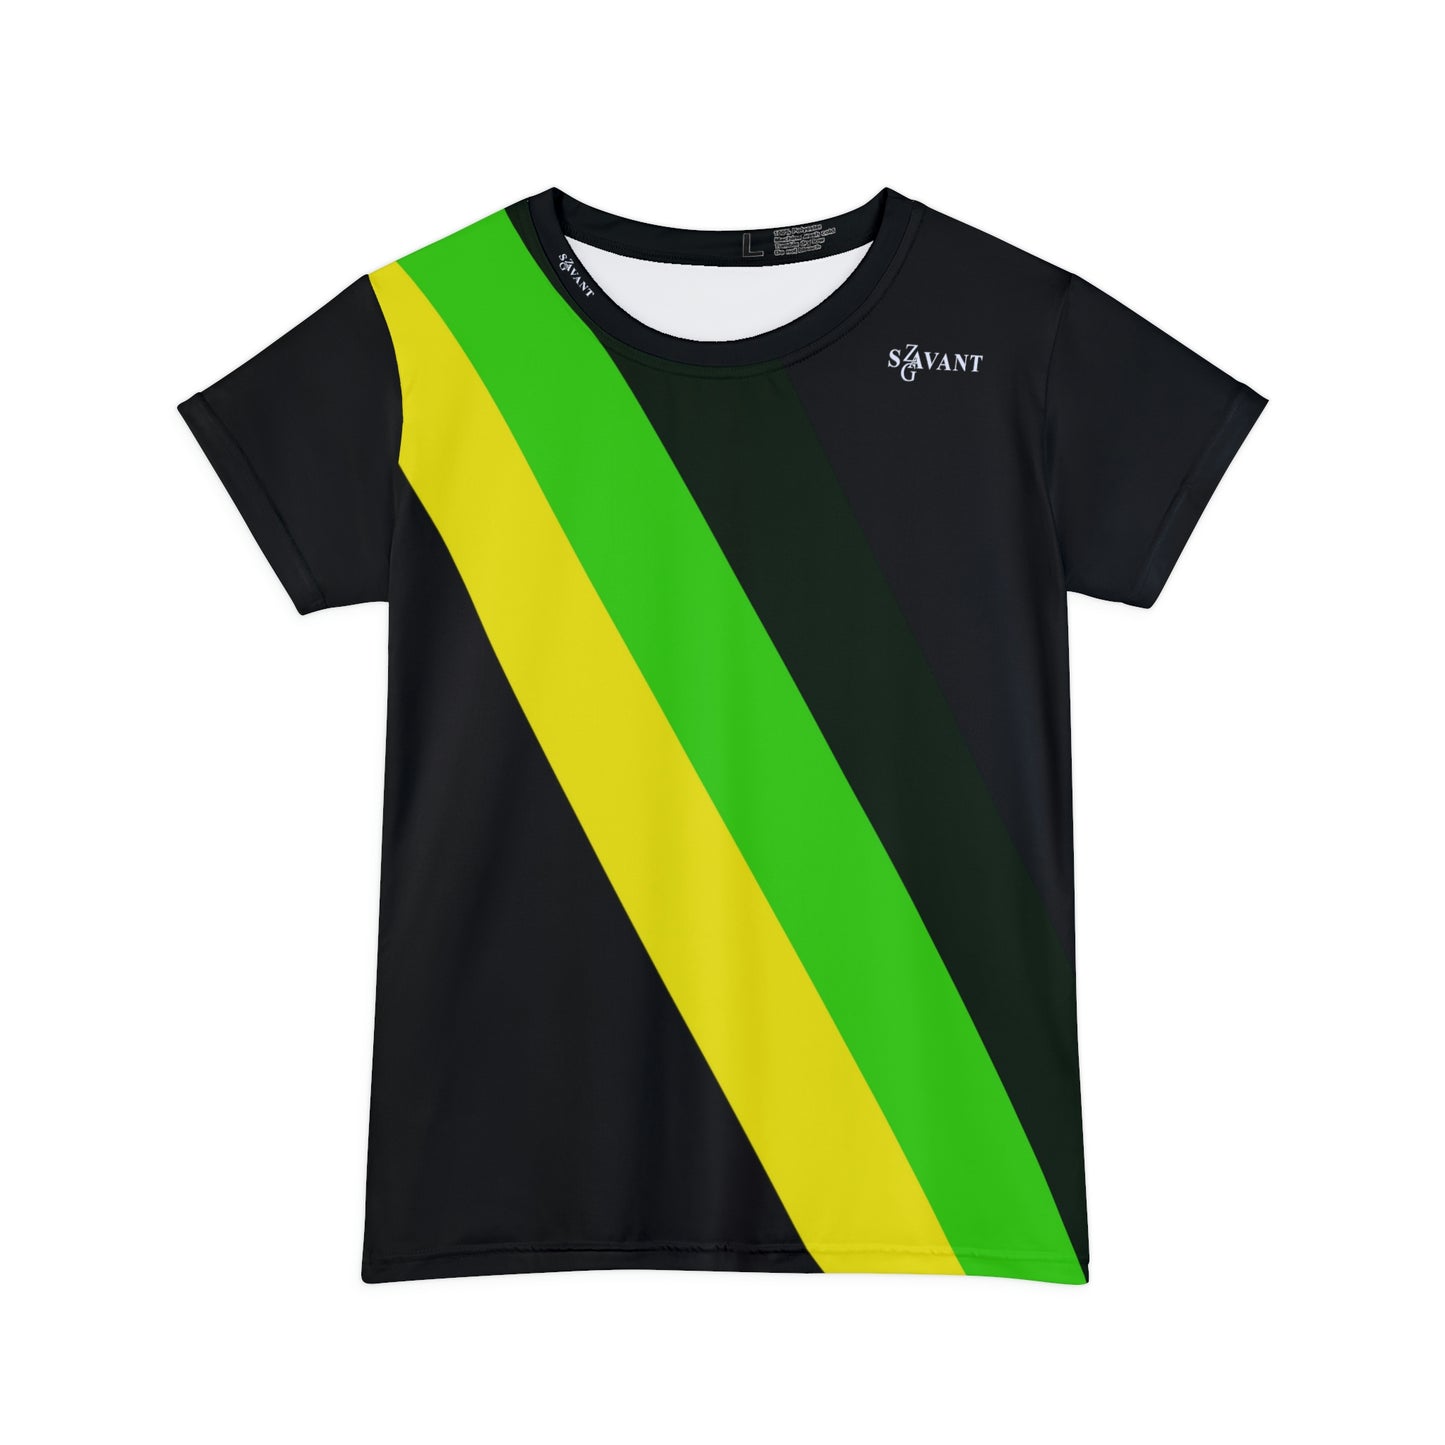 Zag Savant - Jamaican Color Short Sleeve T-shirt - Women's (Black